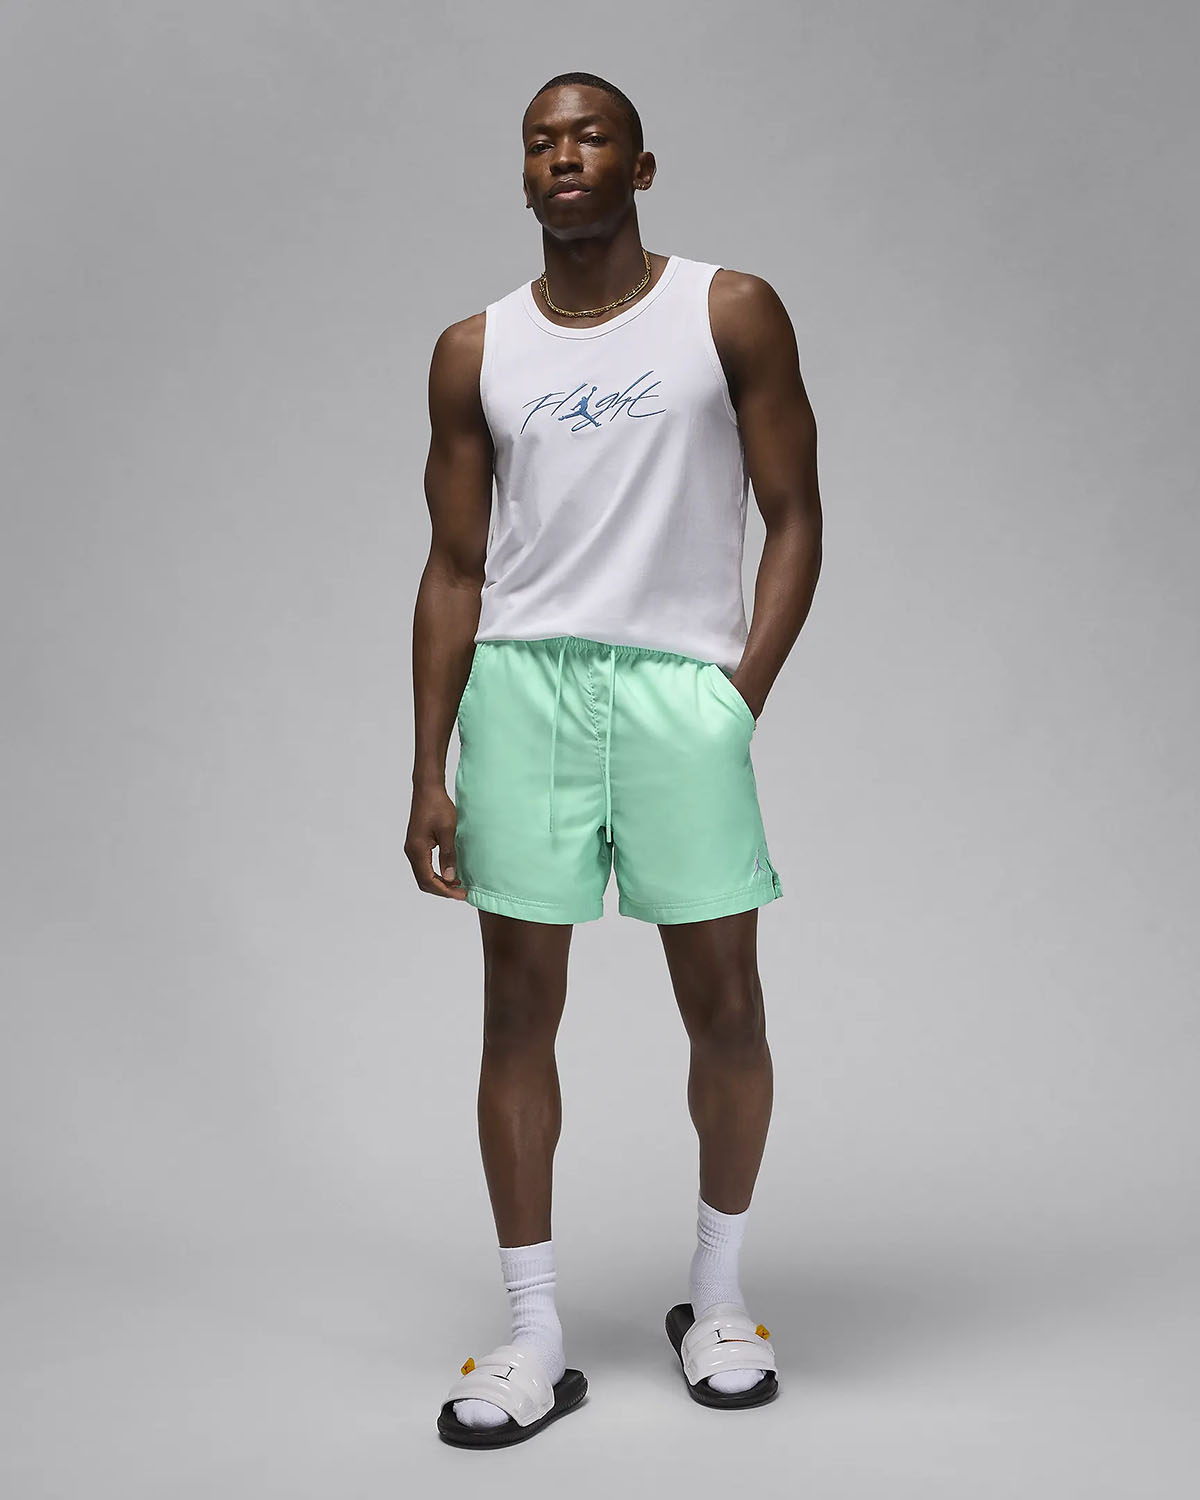 Jordan martin Essentials 5 Inch Poolside Shorts Emerald Rise Outfit